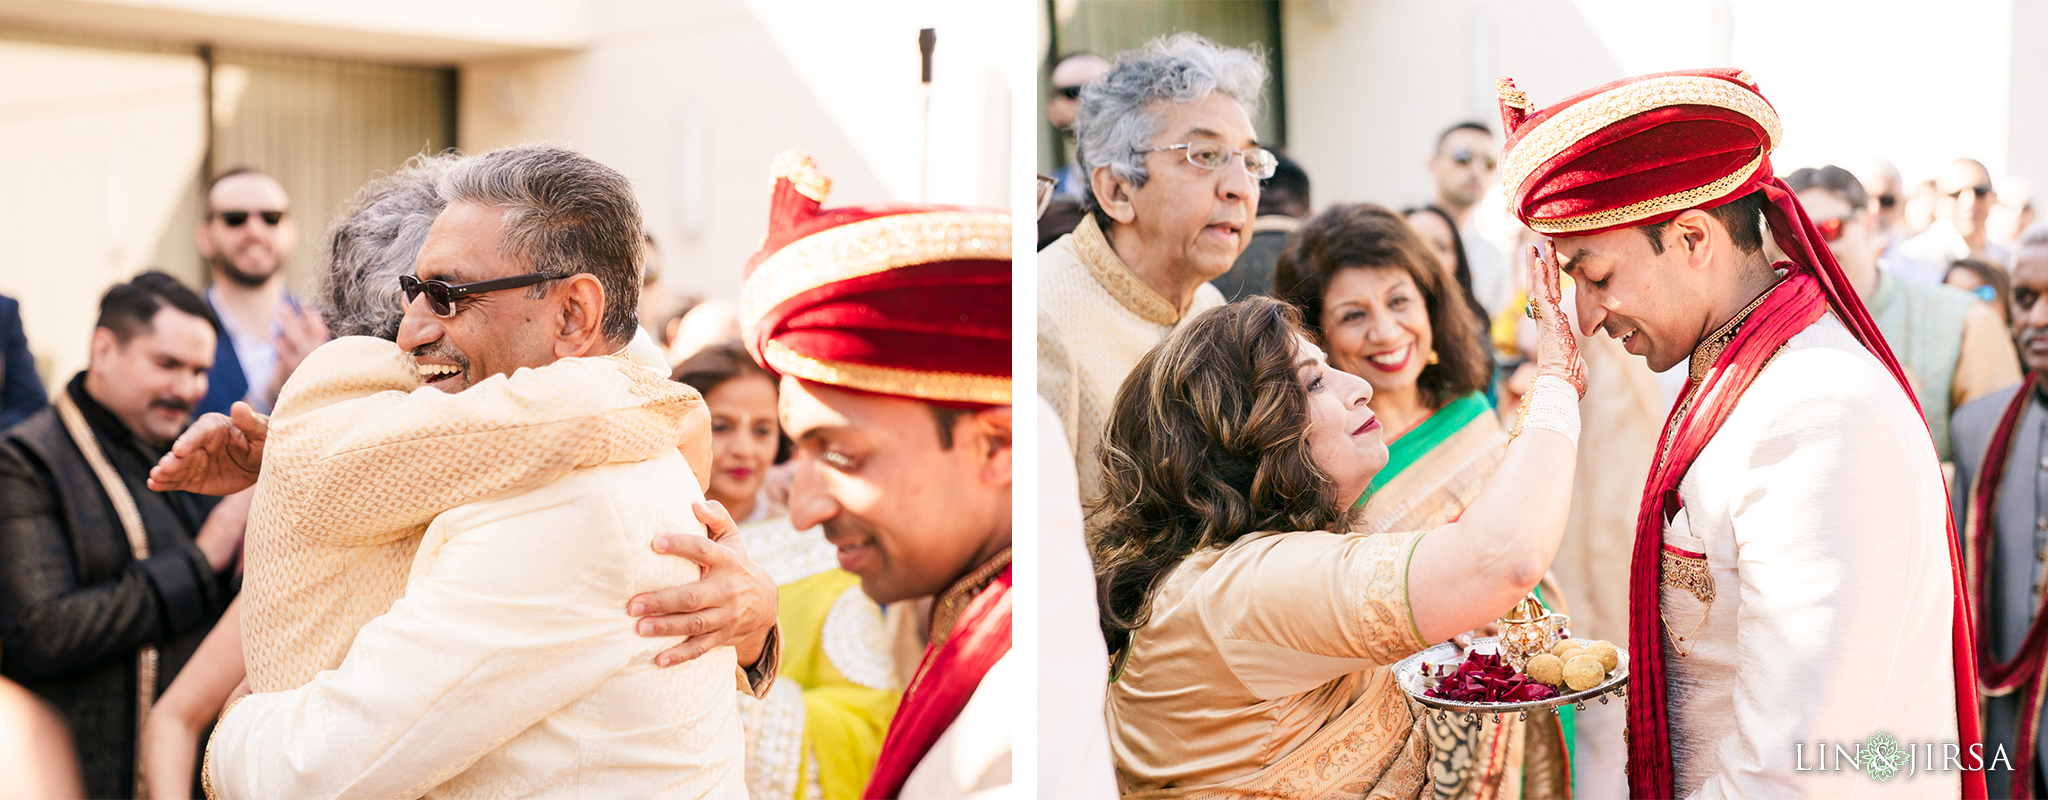 09 Newport Beach Marriott Indian Wedding Photography